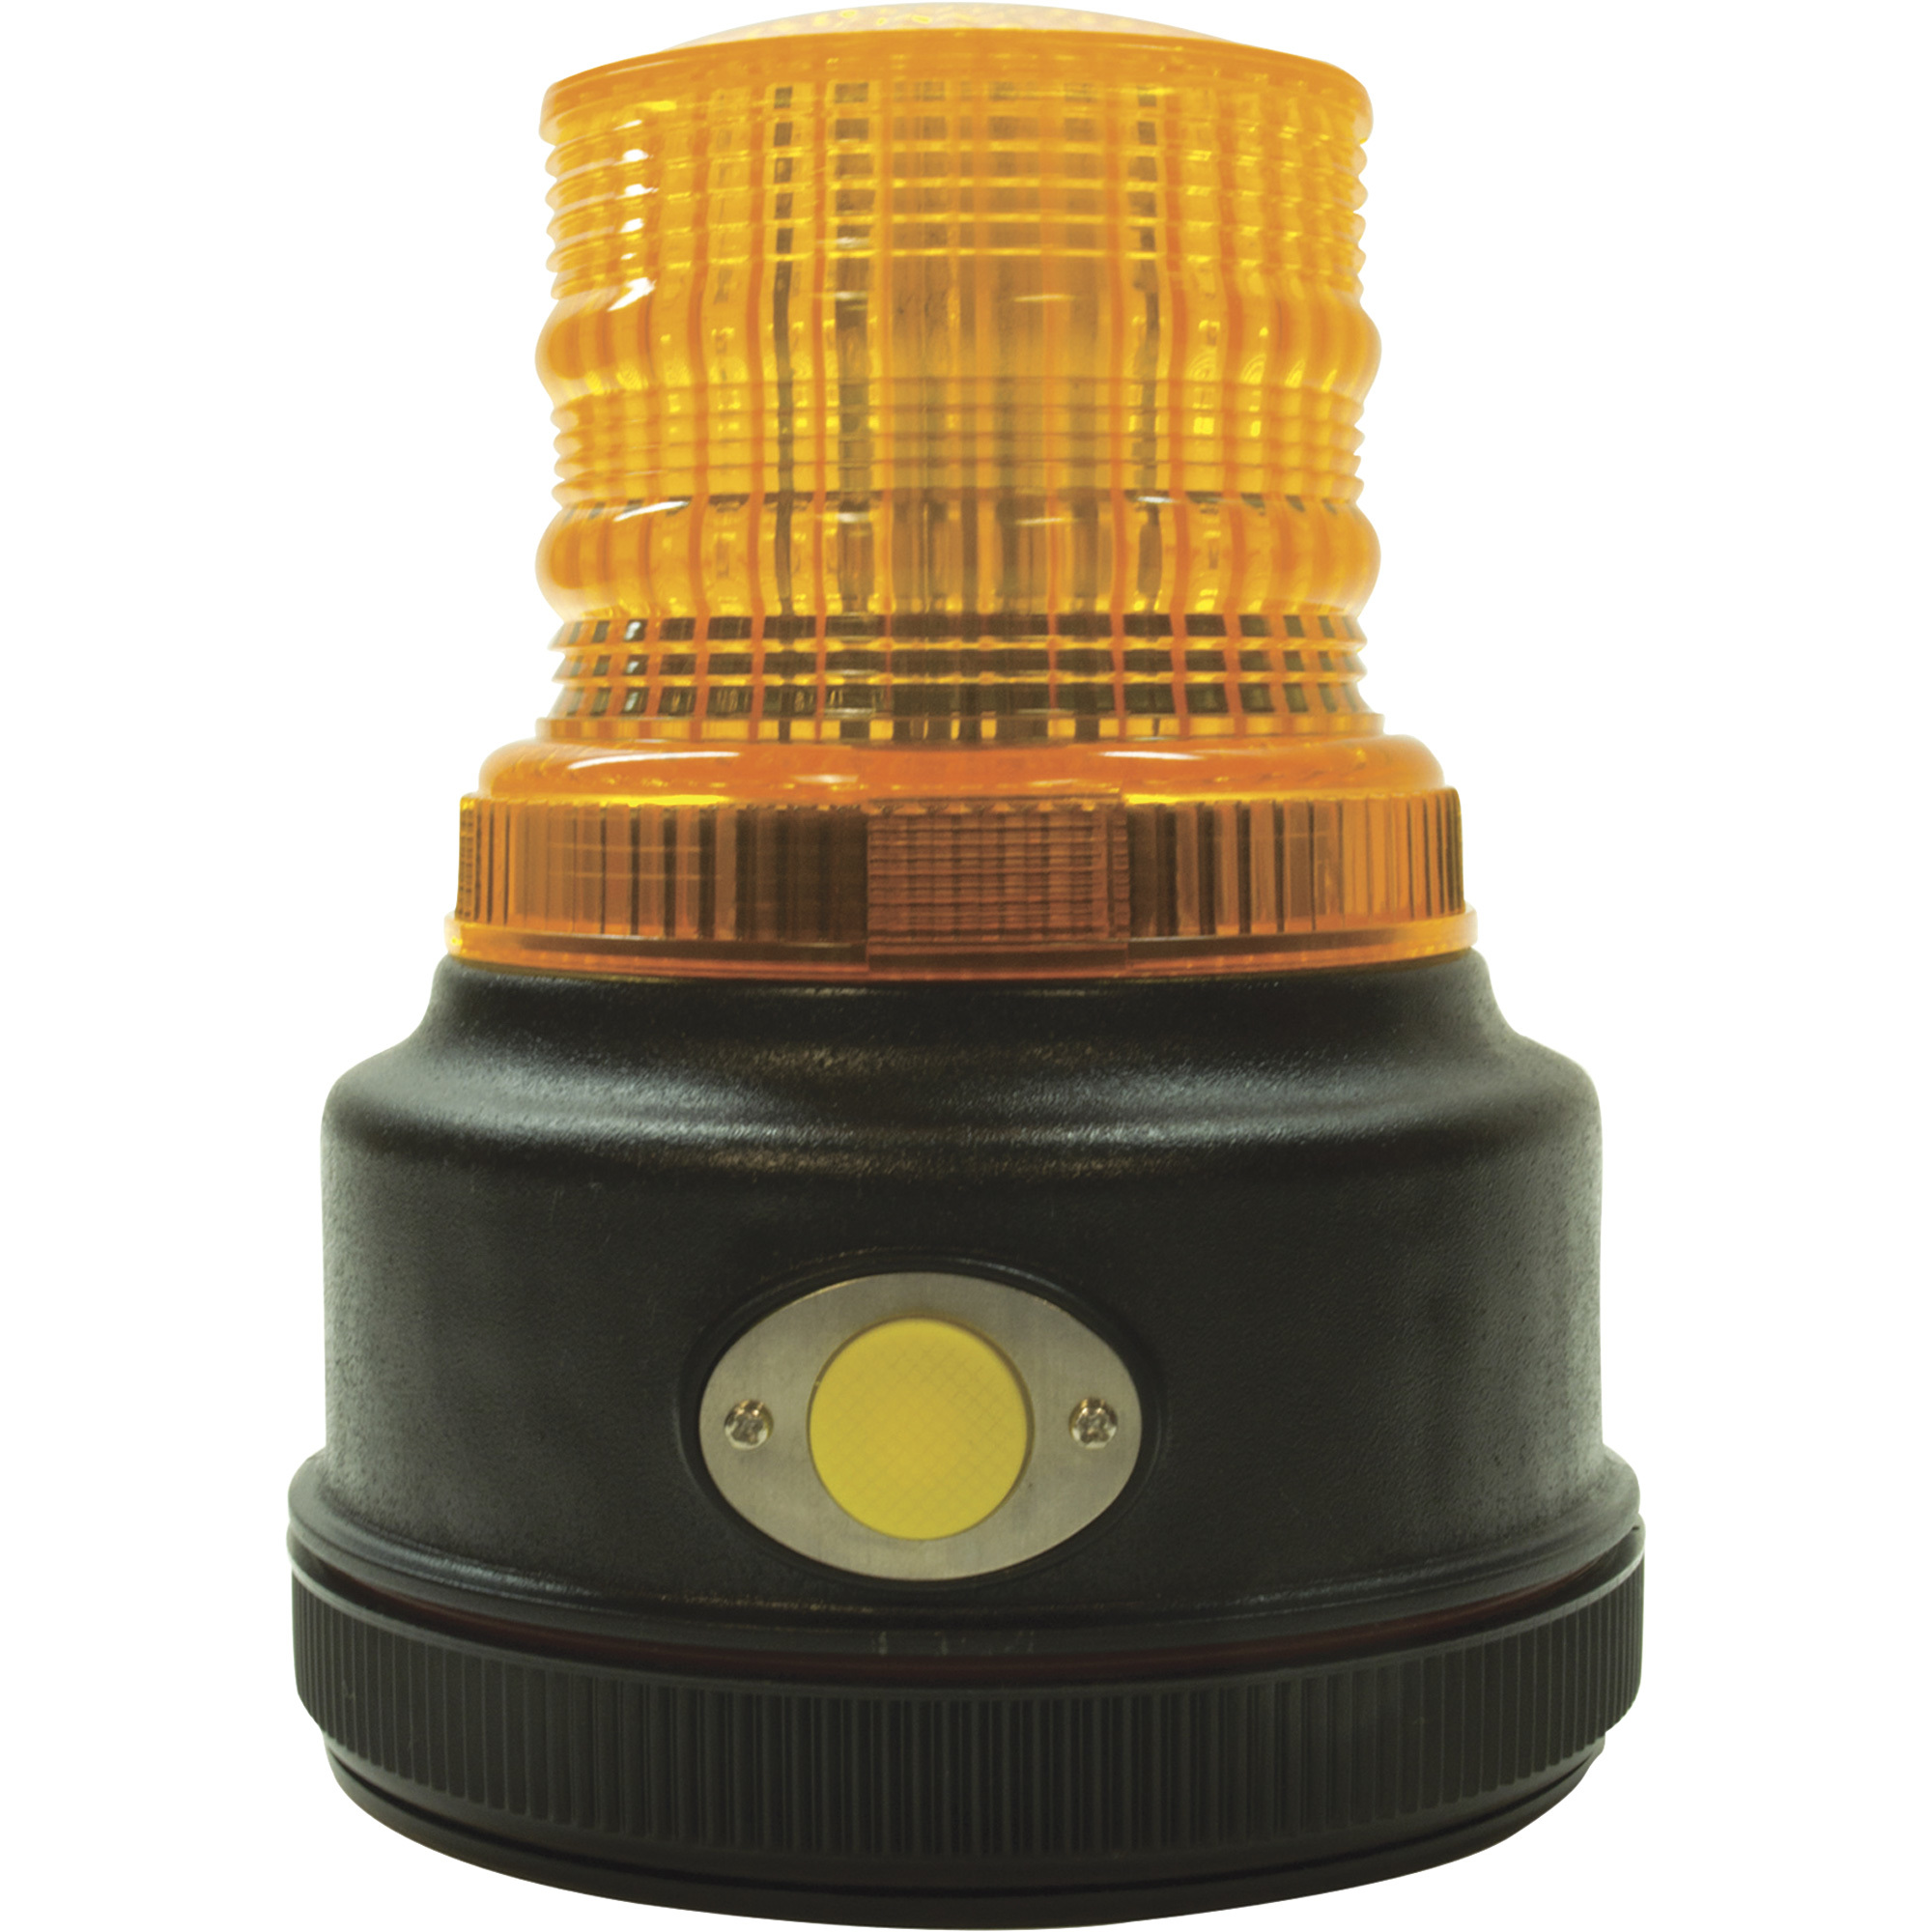 Blazer LED Class 3 Beacon Warning Light â Battery Operated, Amber, Magnetic Mount, Model C43A